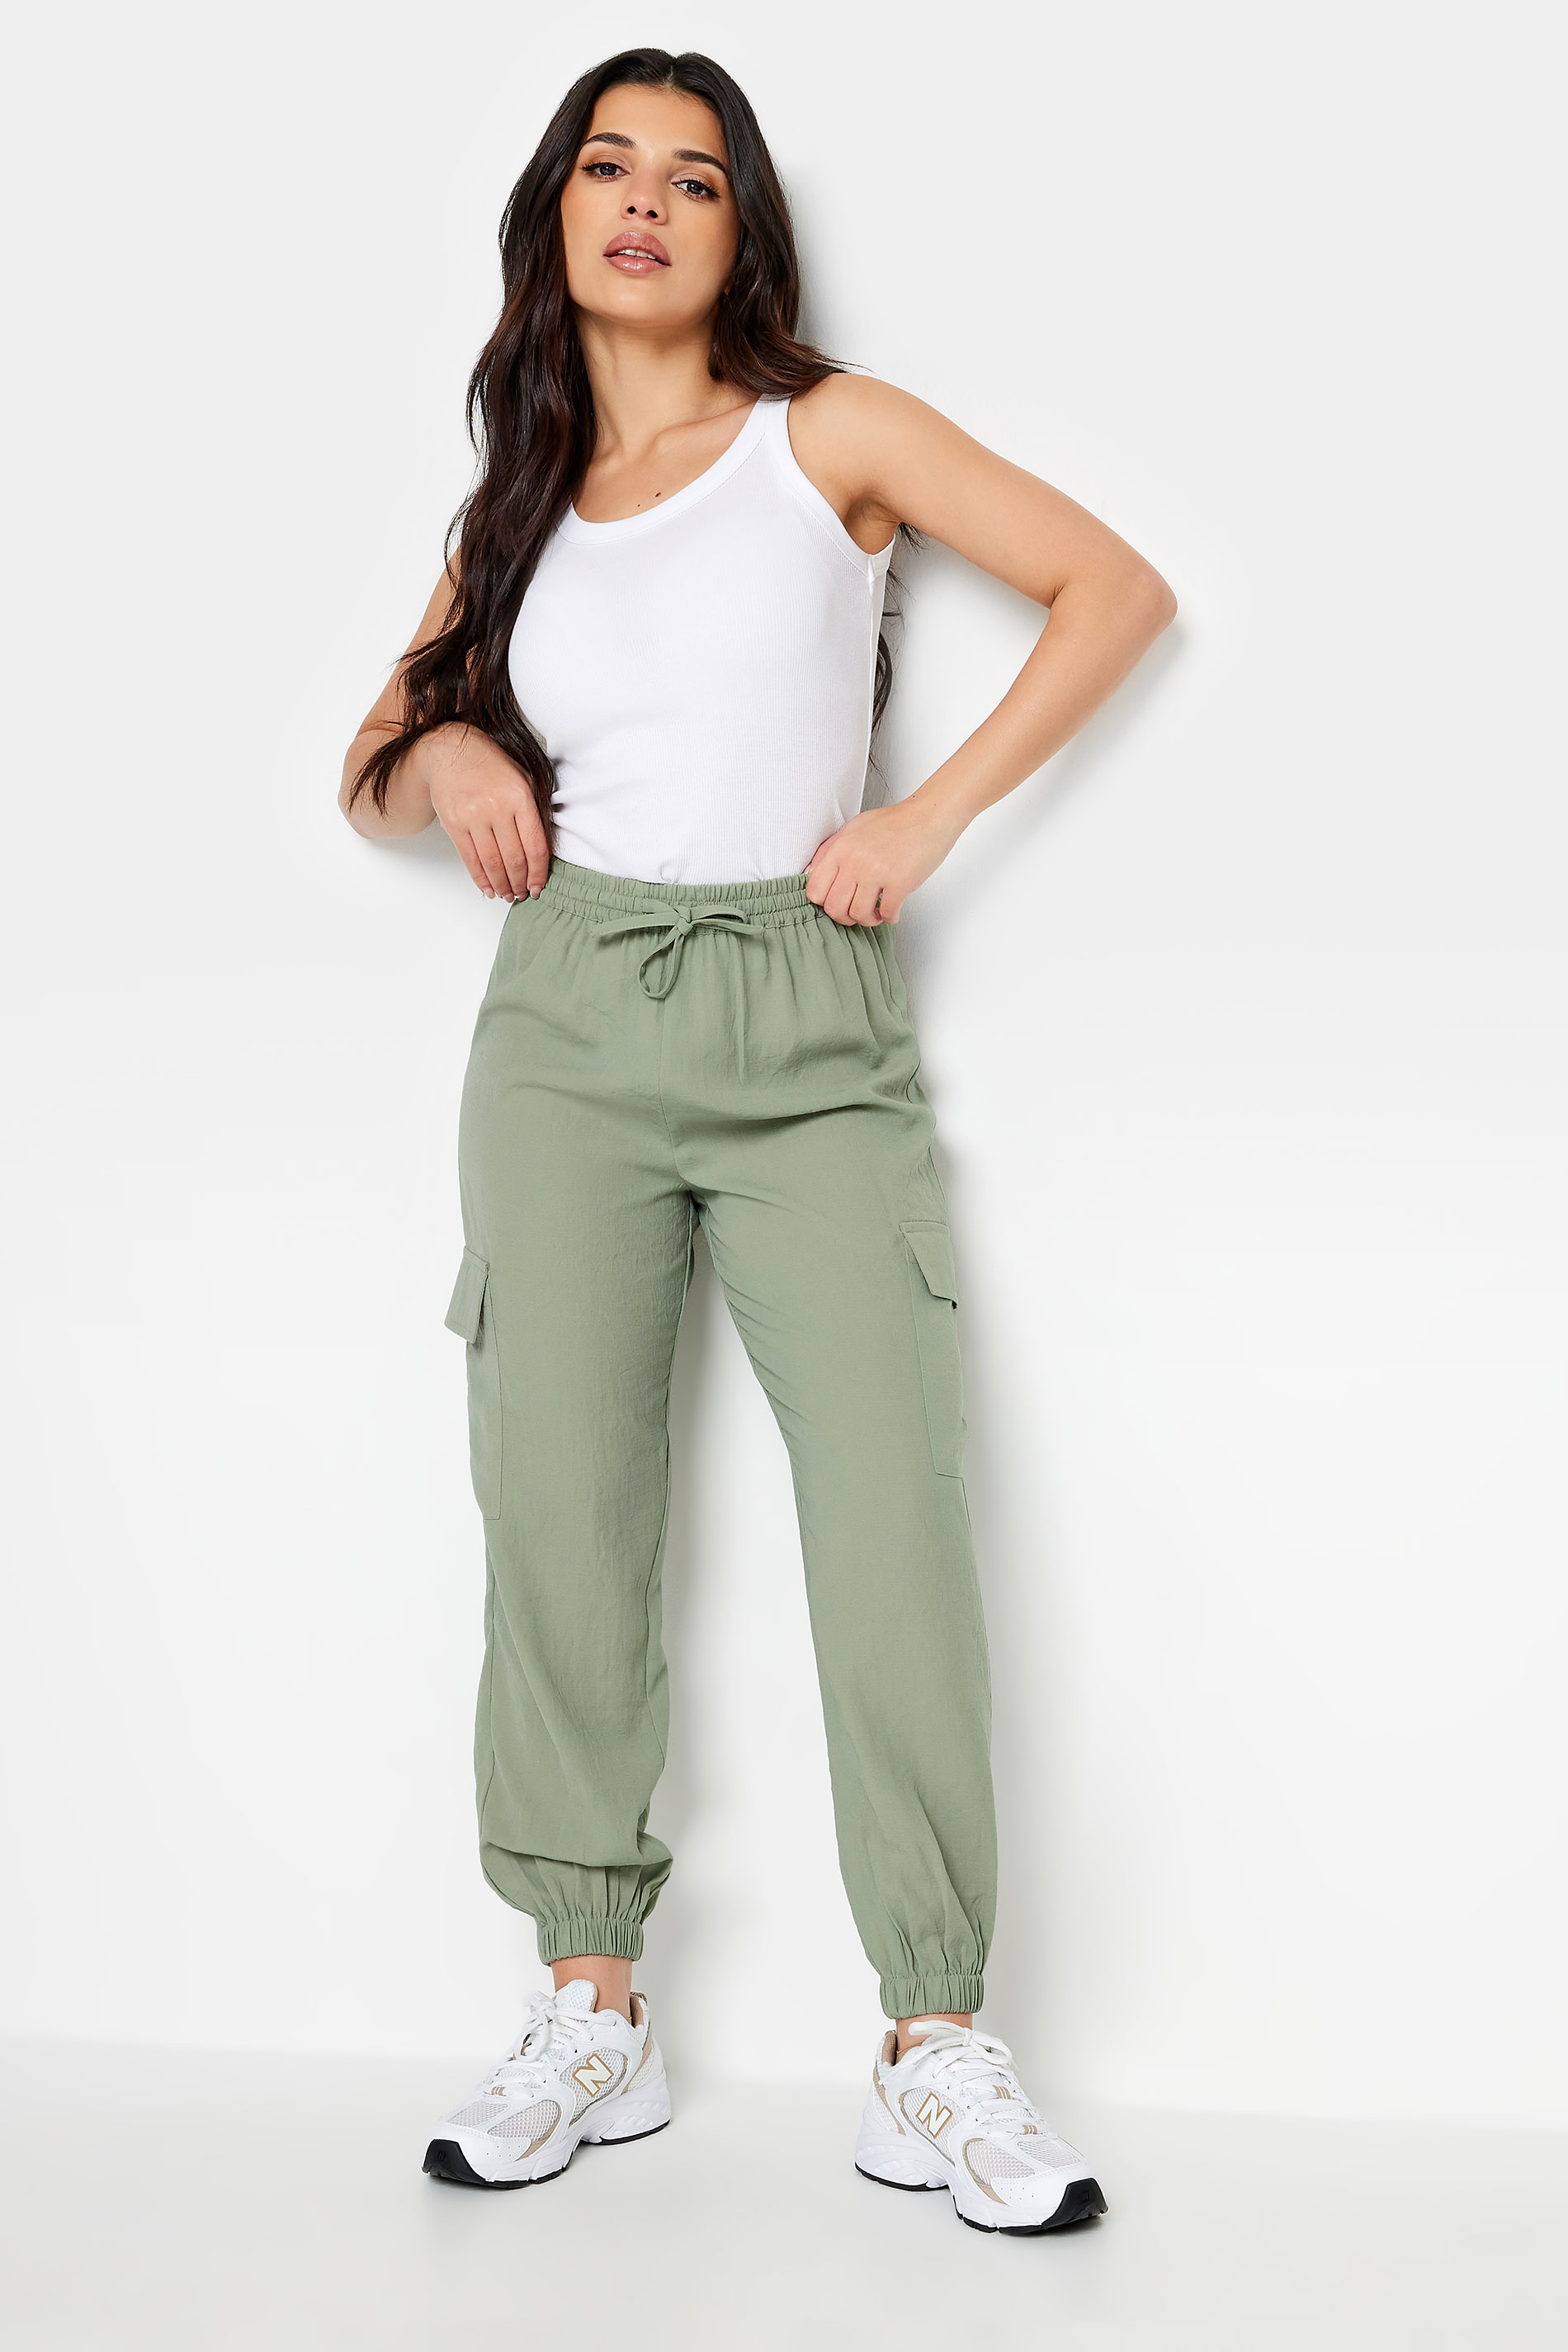 PixieGirl Petite Womens Sage Green Cuffed Cargo Trousers | PixieGirl 1